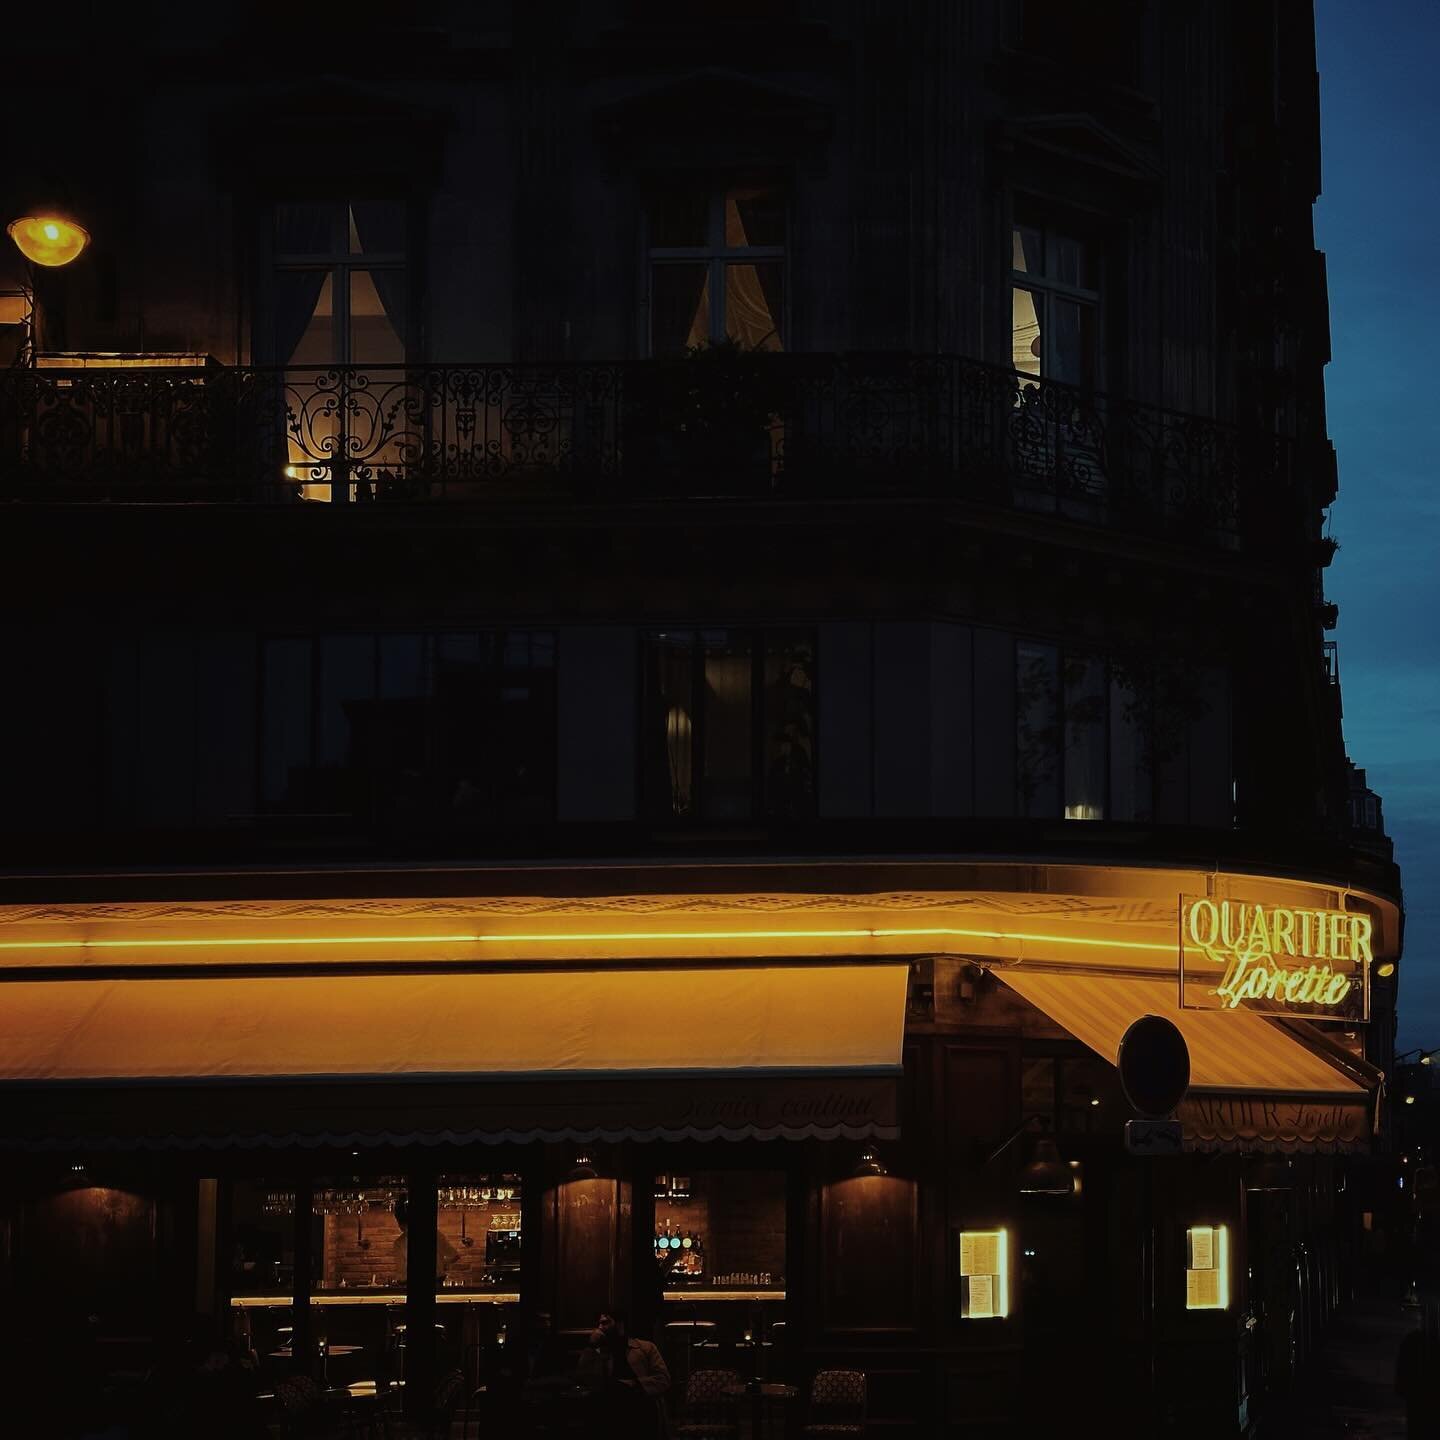 La nuit tombe
-
#standwithukraine ✊🇺🇦
Слава Україні!
-
#photography #streetphotography #architecture #travelphotography 
#architecturephotography #travelphotography #paris